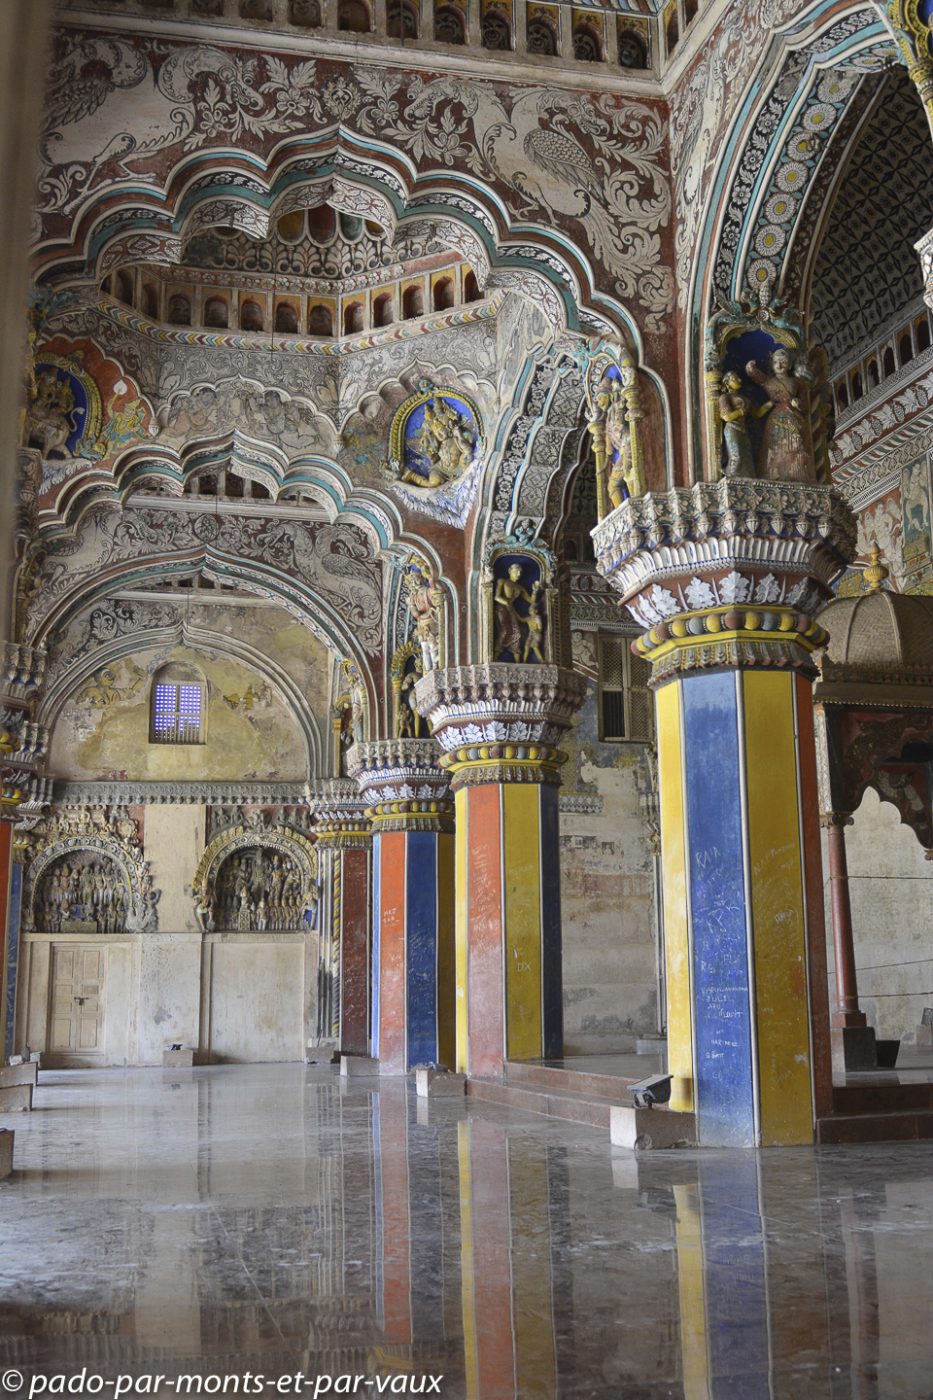 Tanjore - Durbar Hall